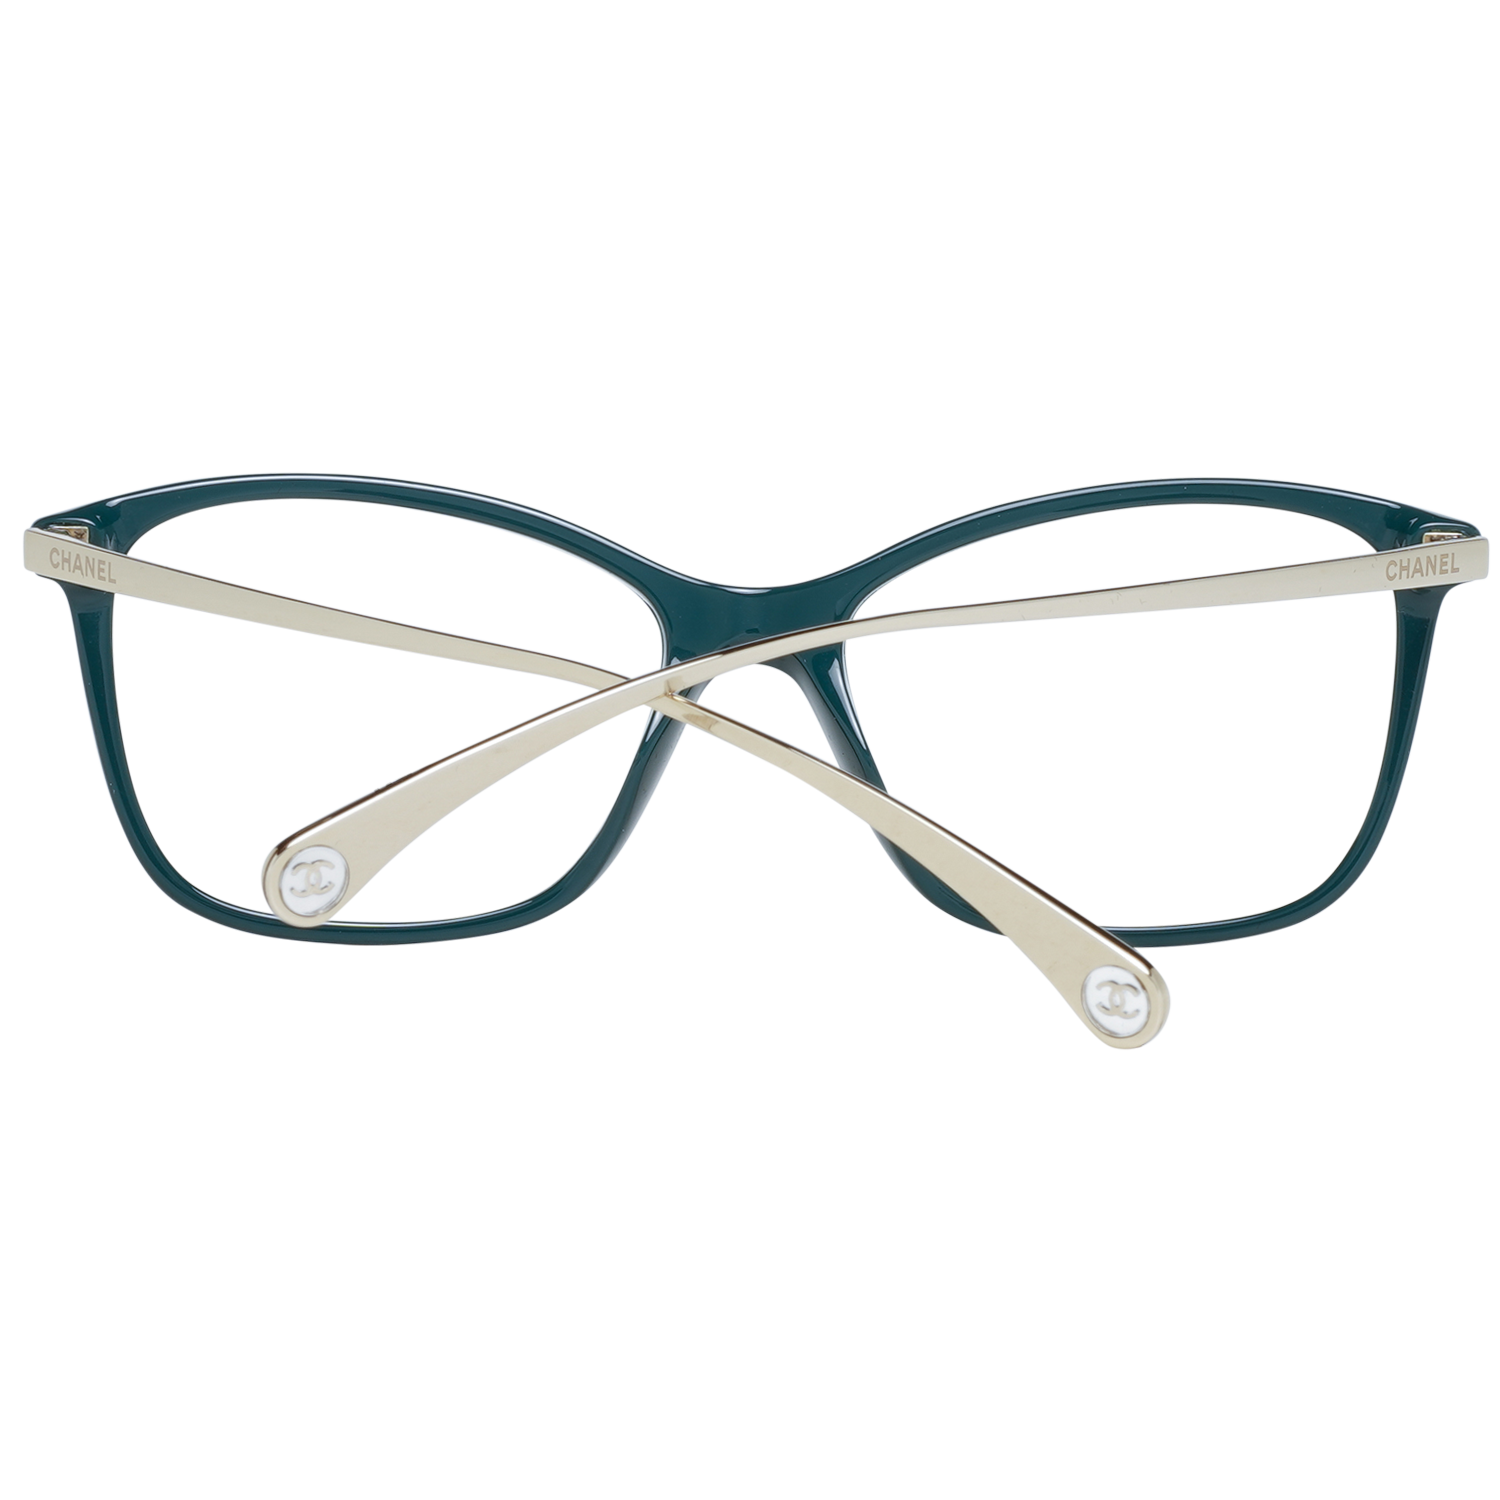 Chanel Frames Chanel Glasses Frames 0CH3422 1699 54mm Eyeglasses Eyewear UK USA Australia 